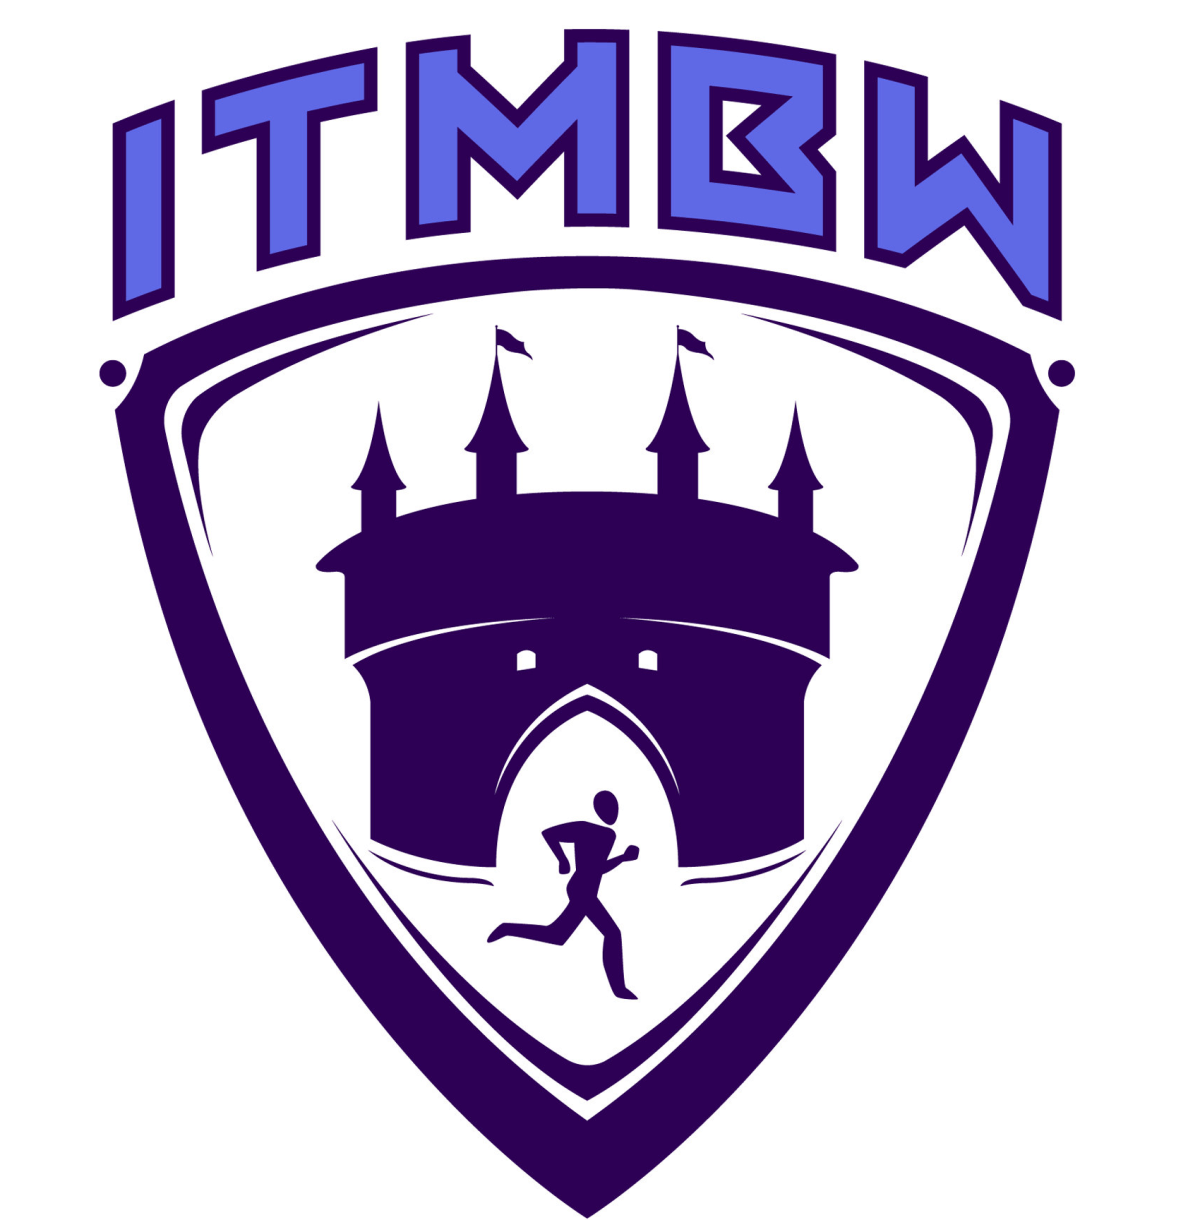 ITMBW logo